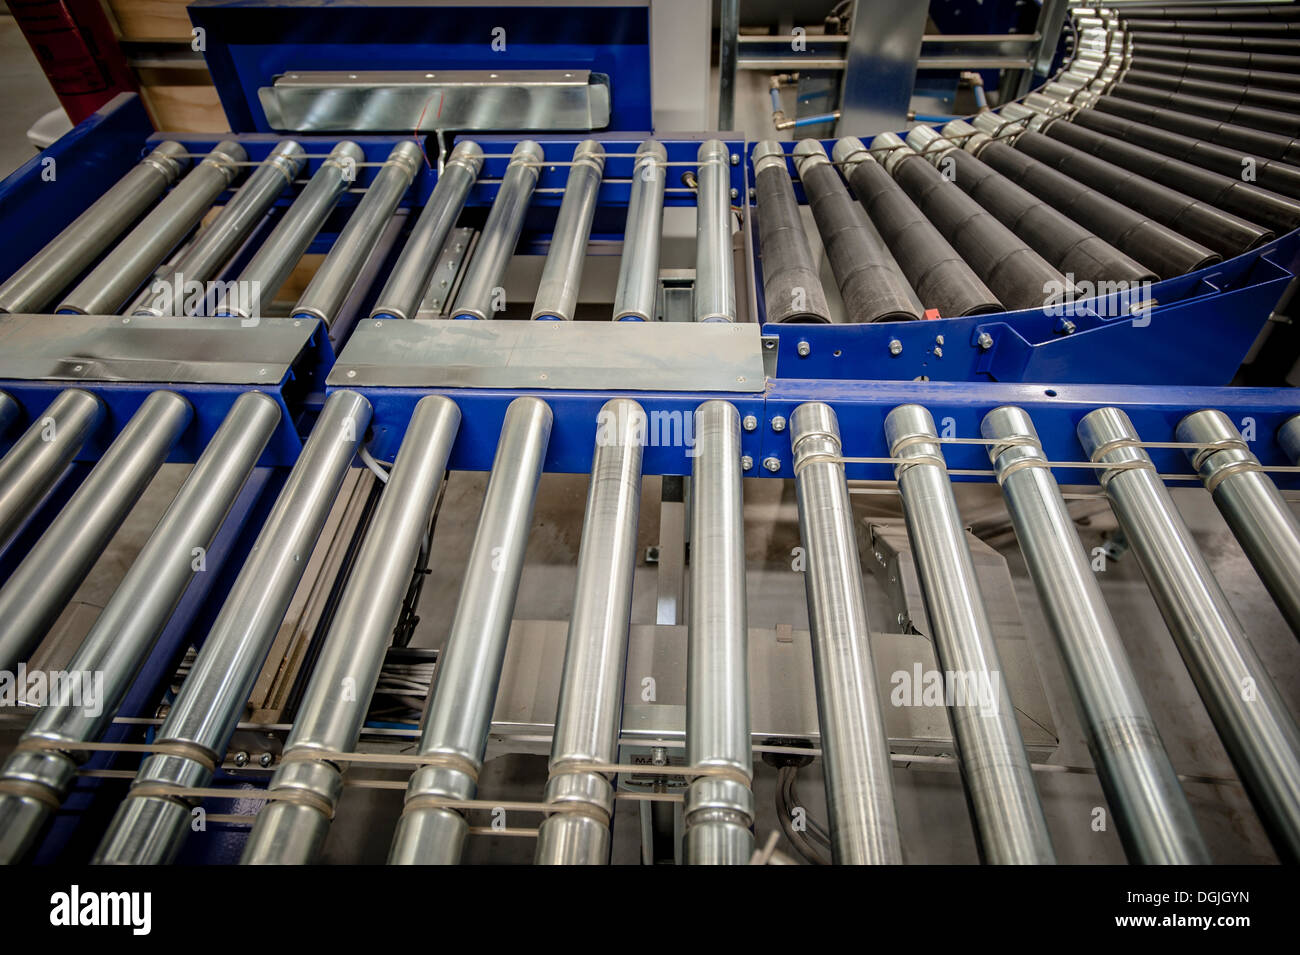 Empty conveyer belt in distribution warehouse Stock Photo